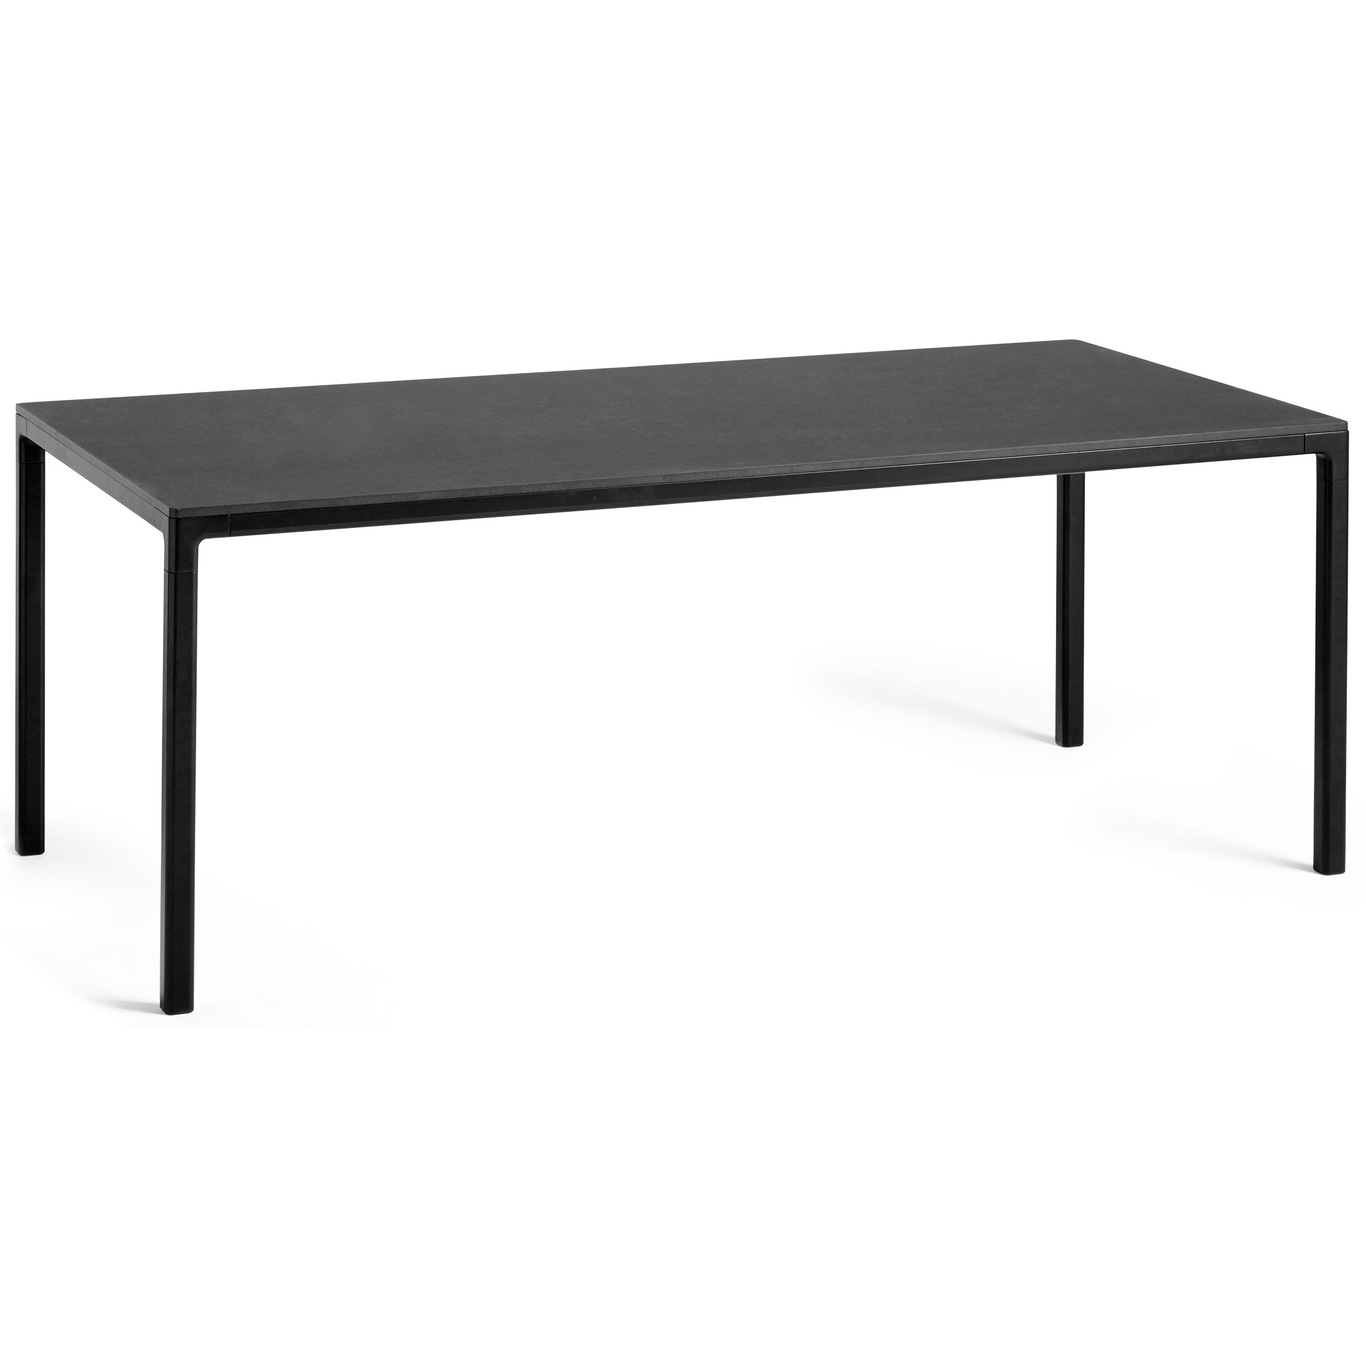 T12 Table 95x200 cm, Black